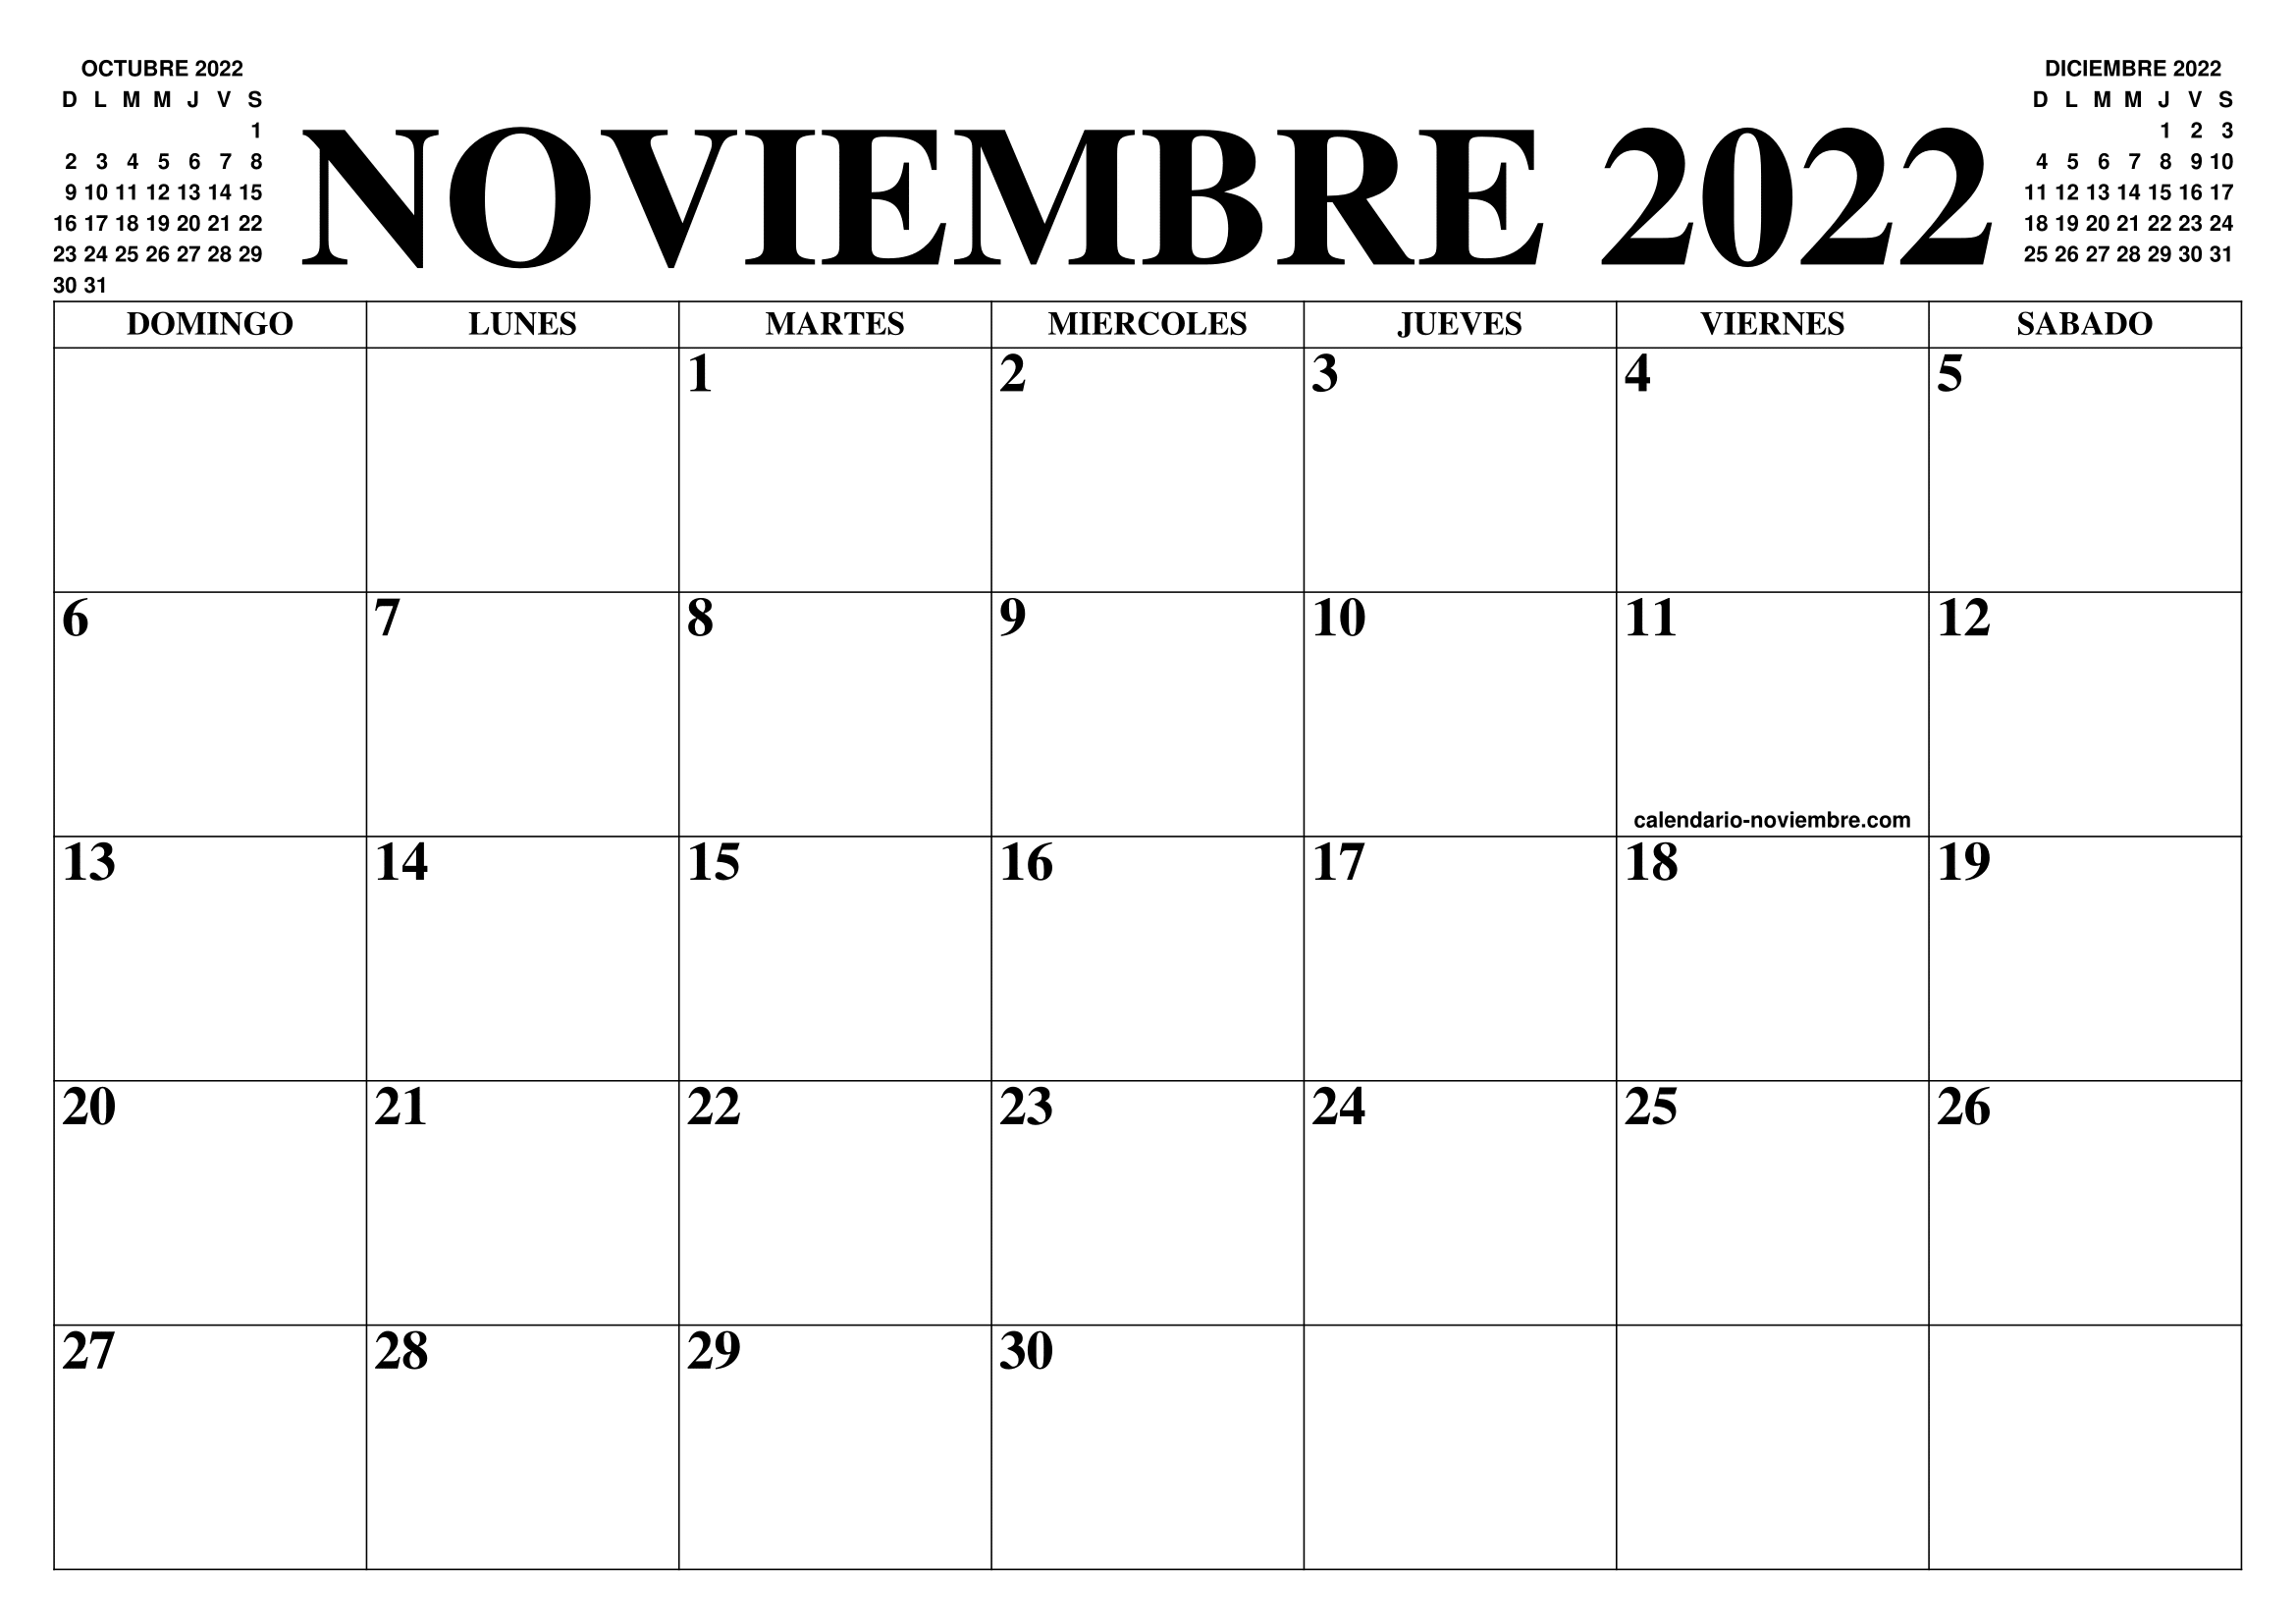 Calendario Noviembre 2022 El Calendario Noviembre Para Imprimir Gratis Mes Y Ano Agenda